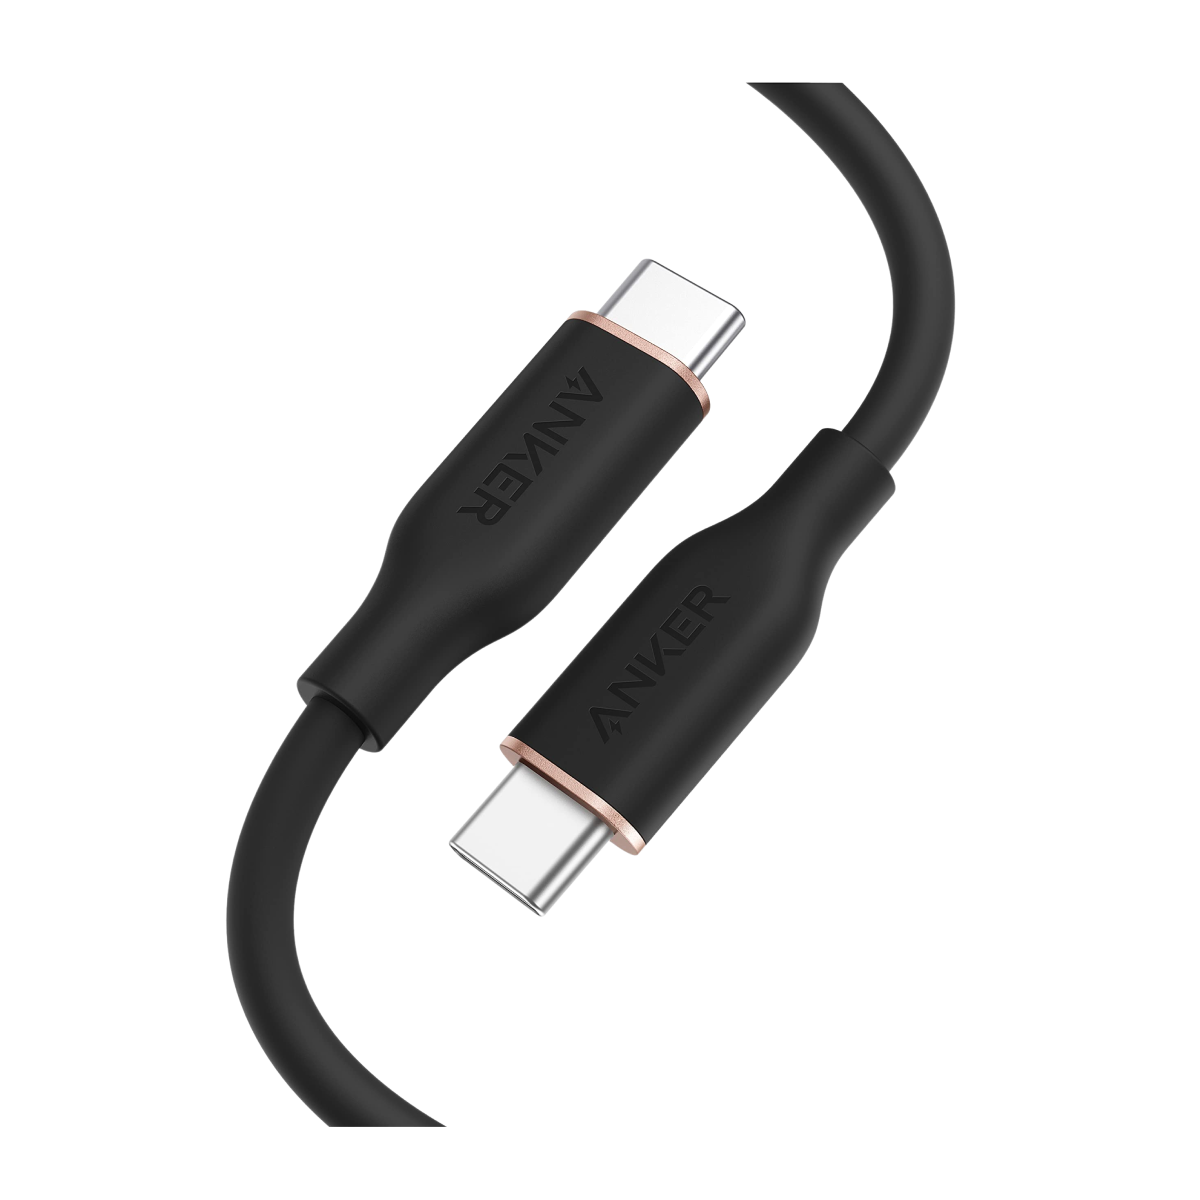 Câble USB/USB-C en silicone - USB 3.2 gen 1 - 2m - bleu